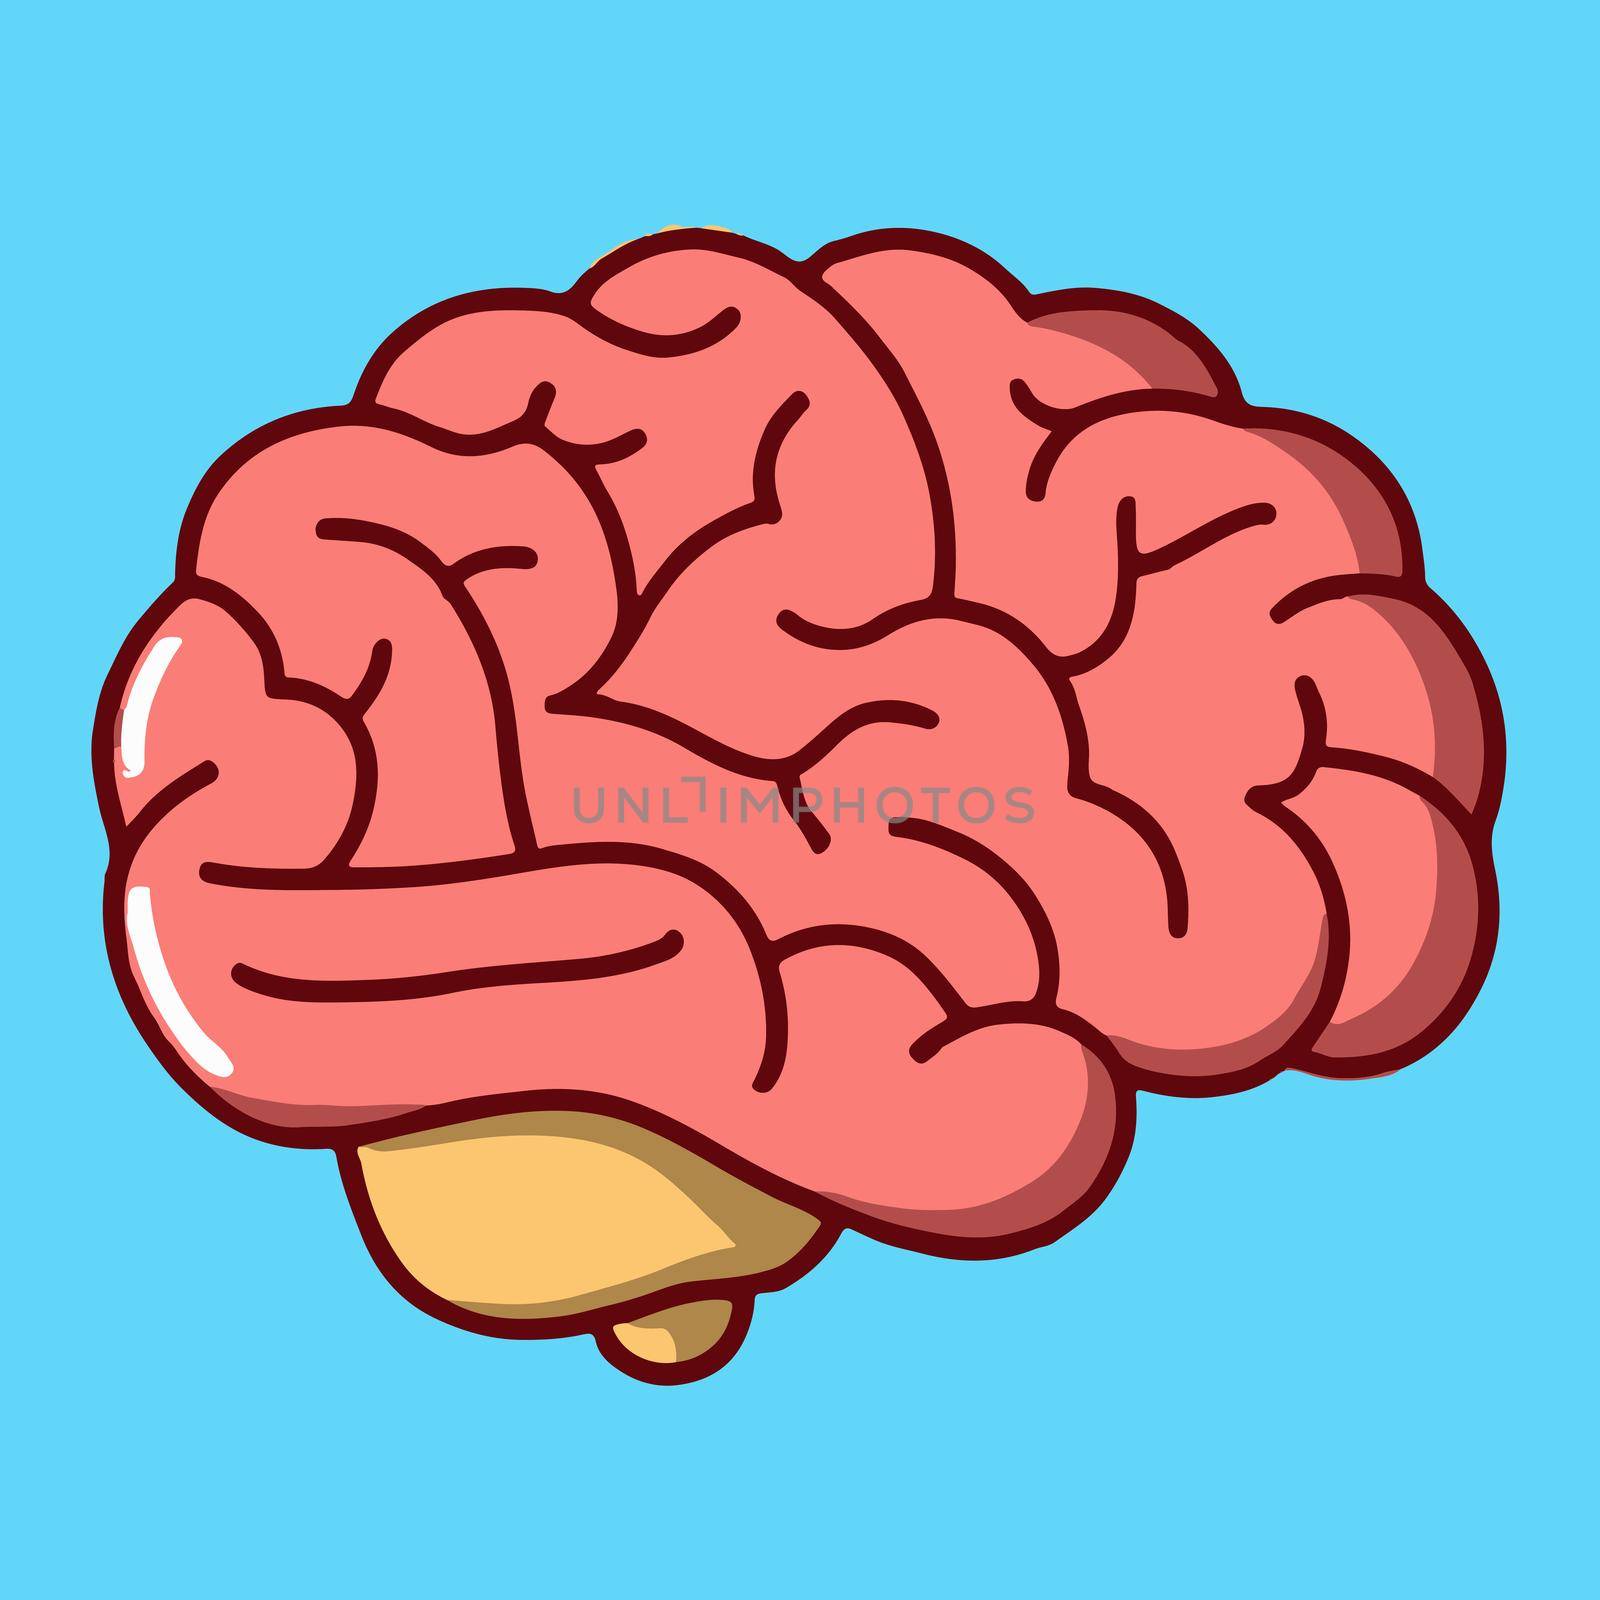 cartoon illustration of human brain by JpRamos